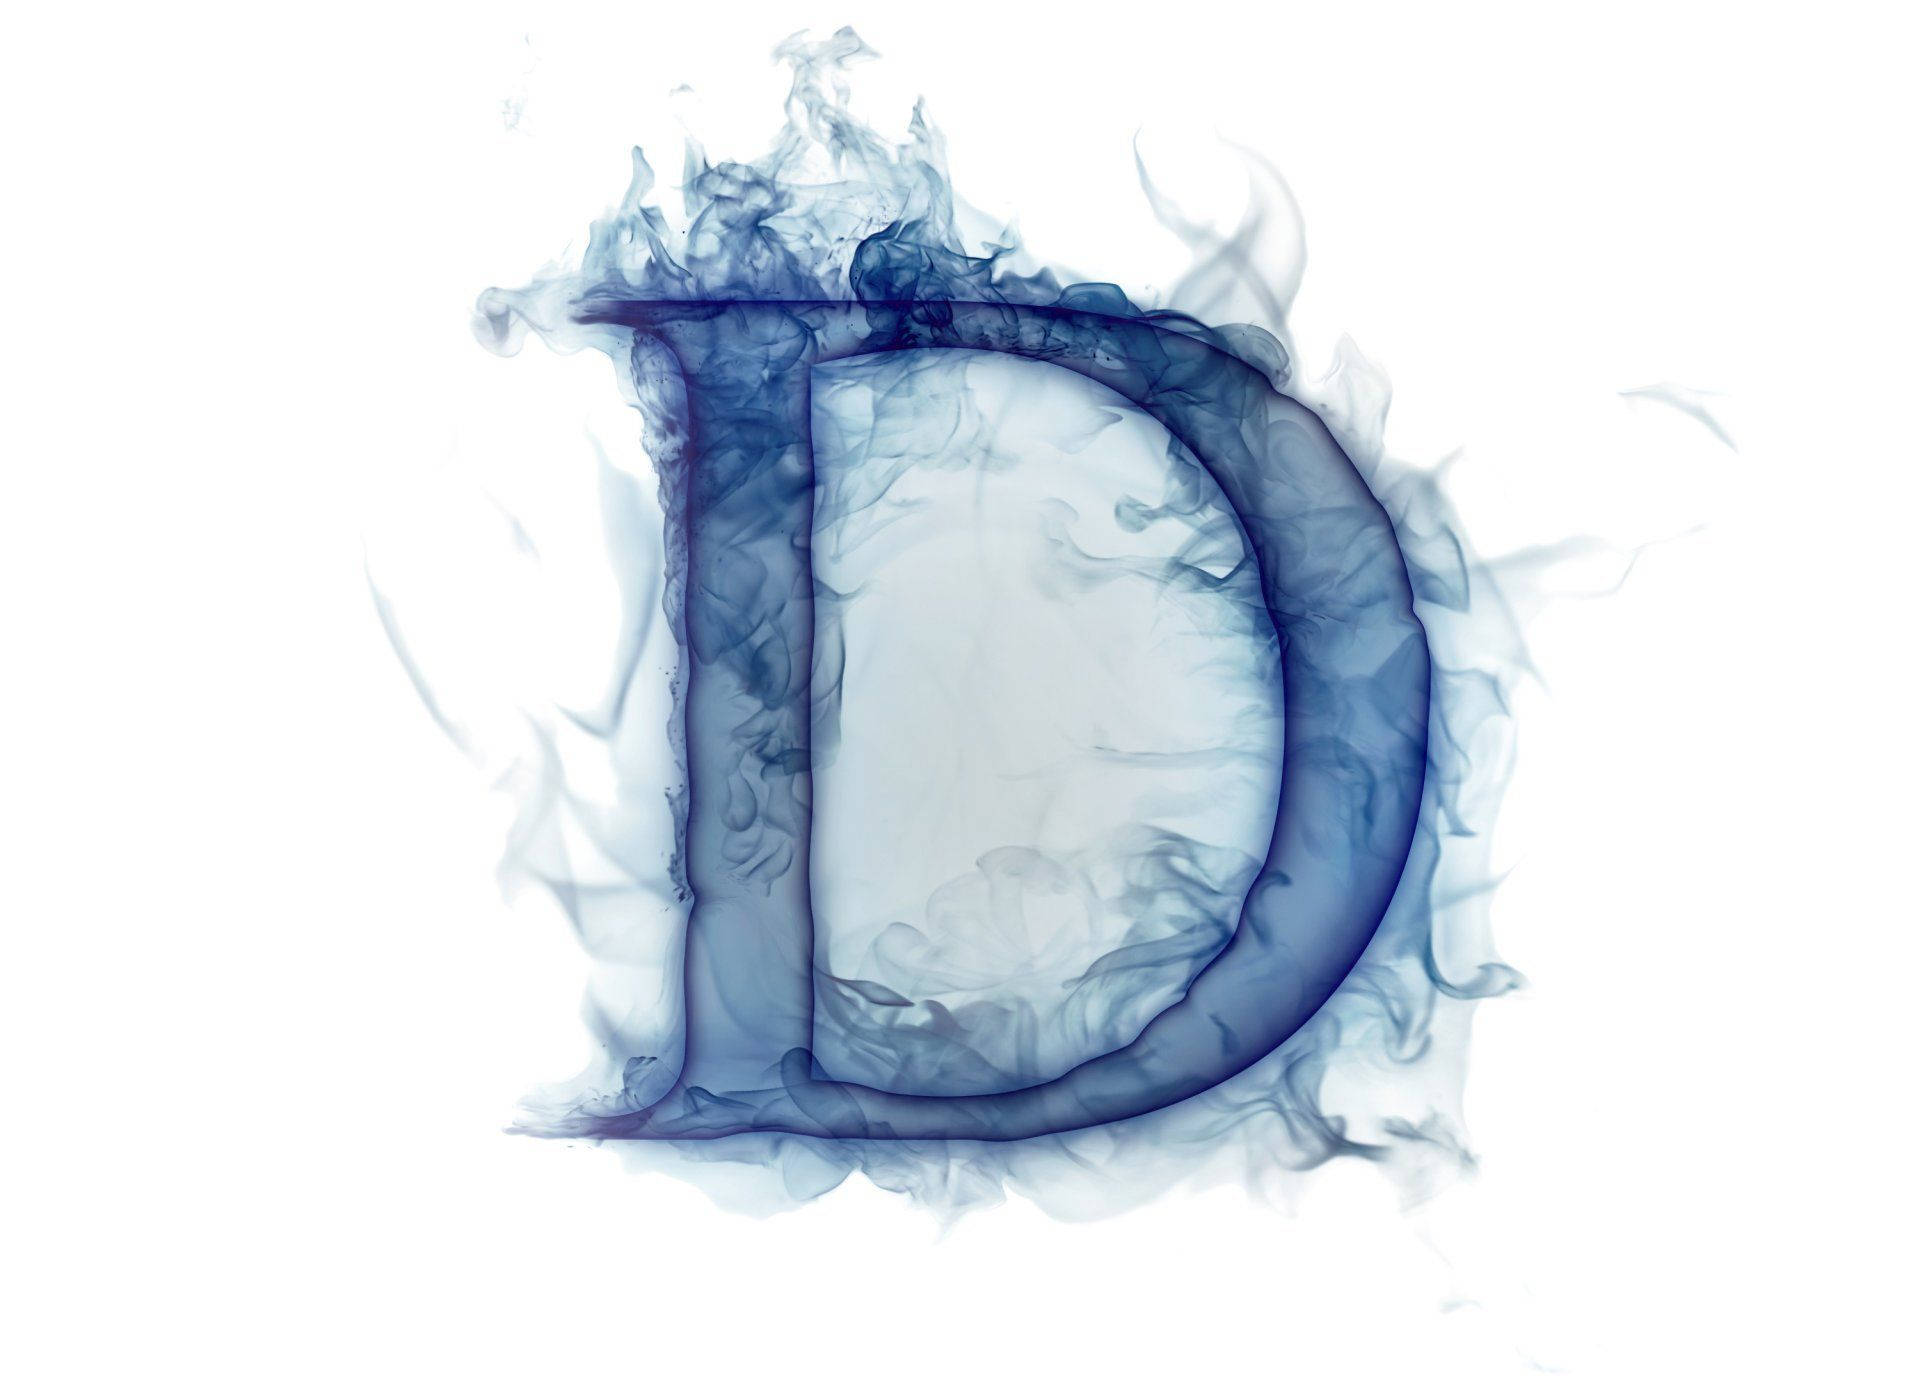 Monogram D In Translucent Blue Flame